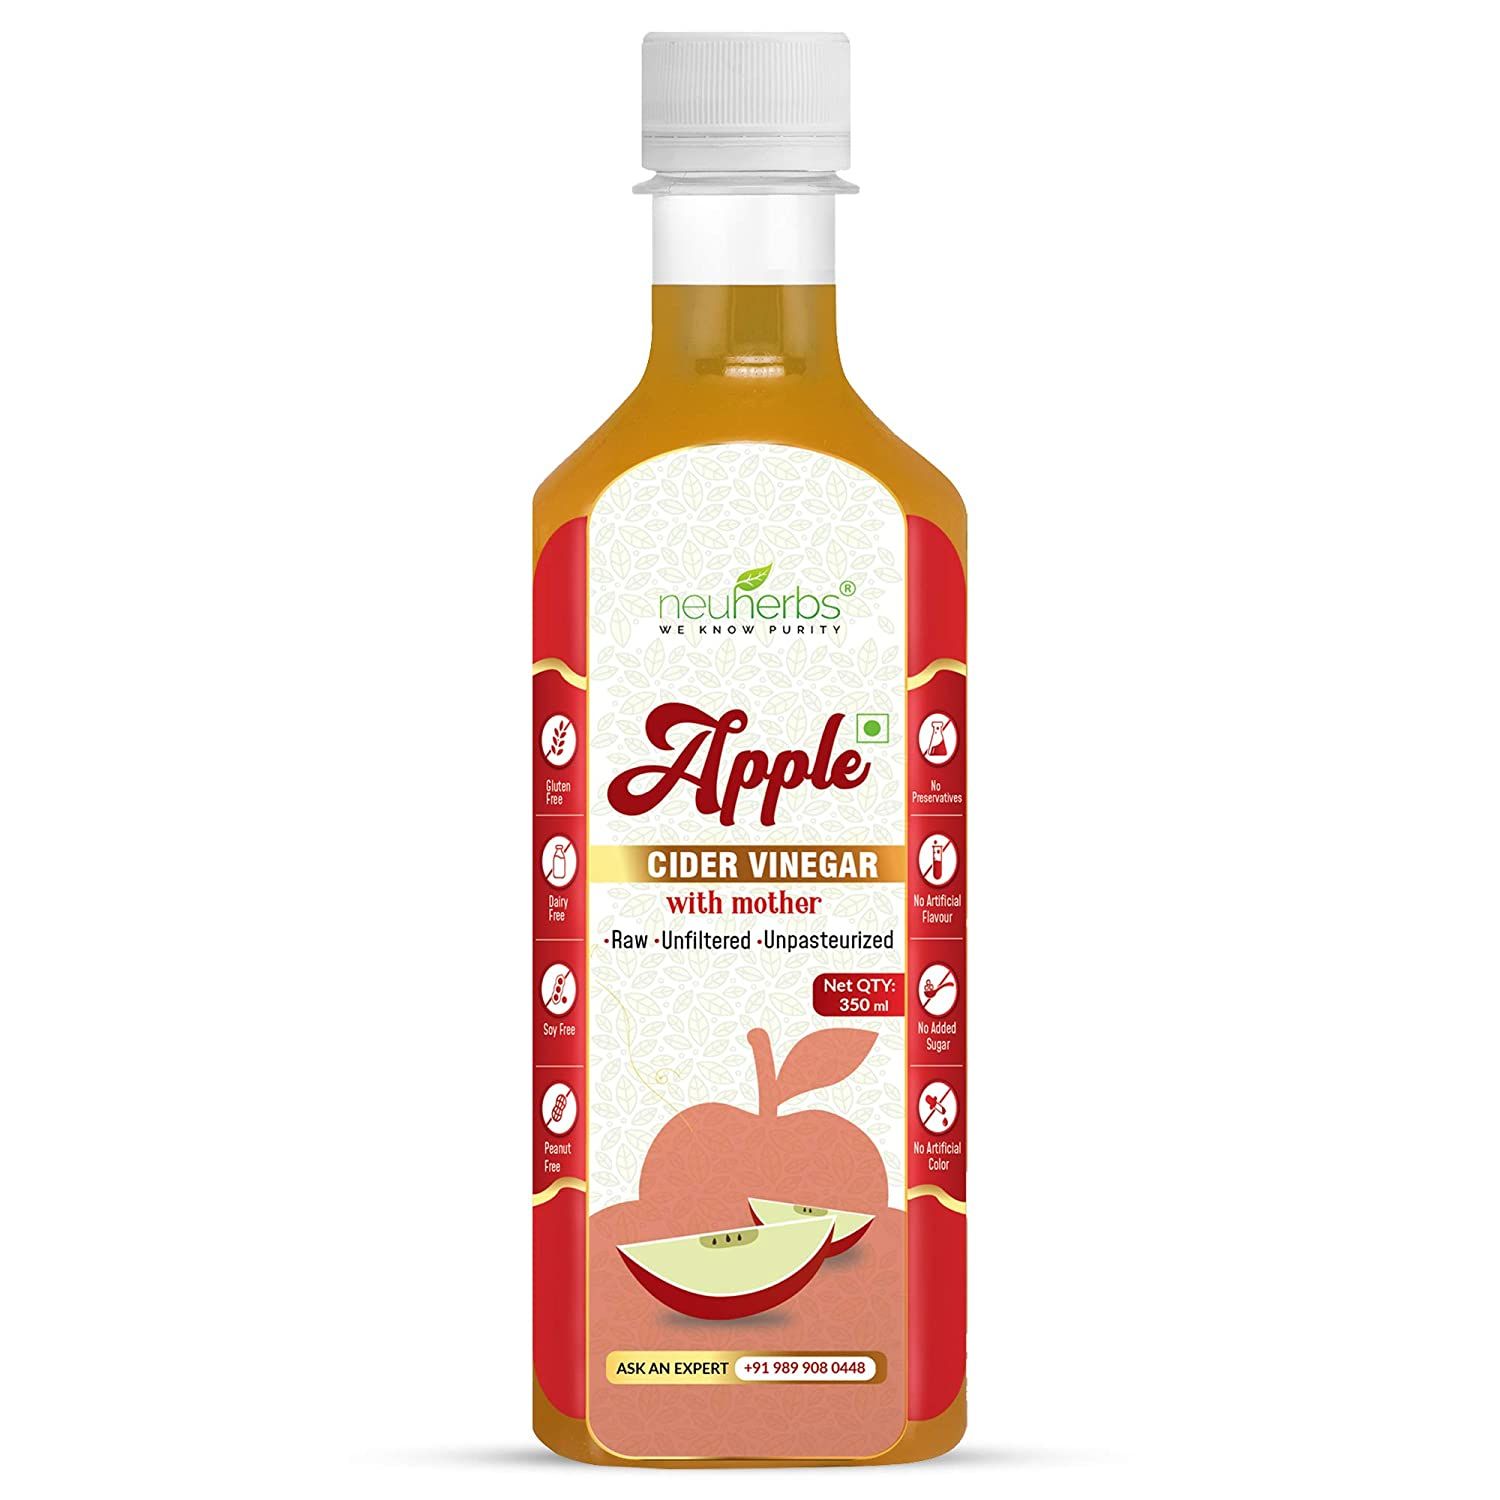 Neuherbs Apple Cider Vinegar with Mother Vinegar Image